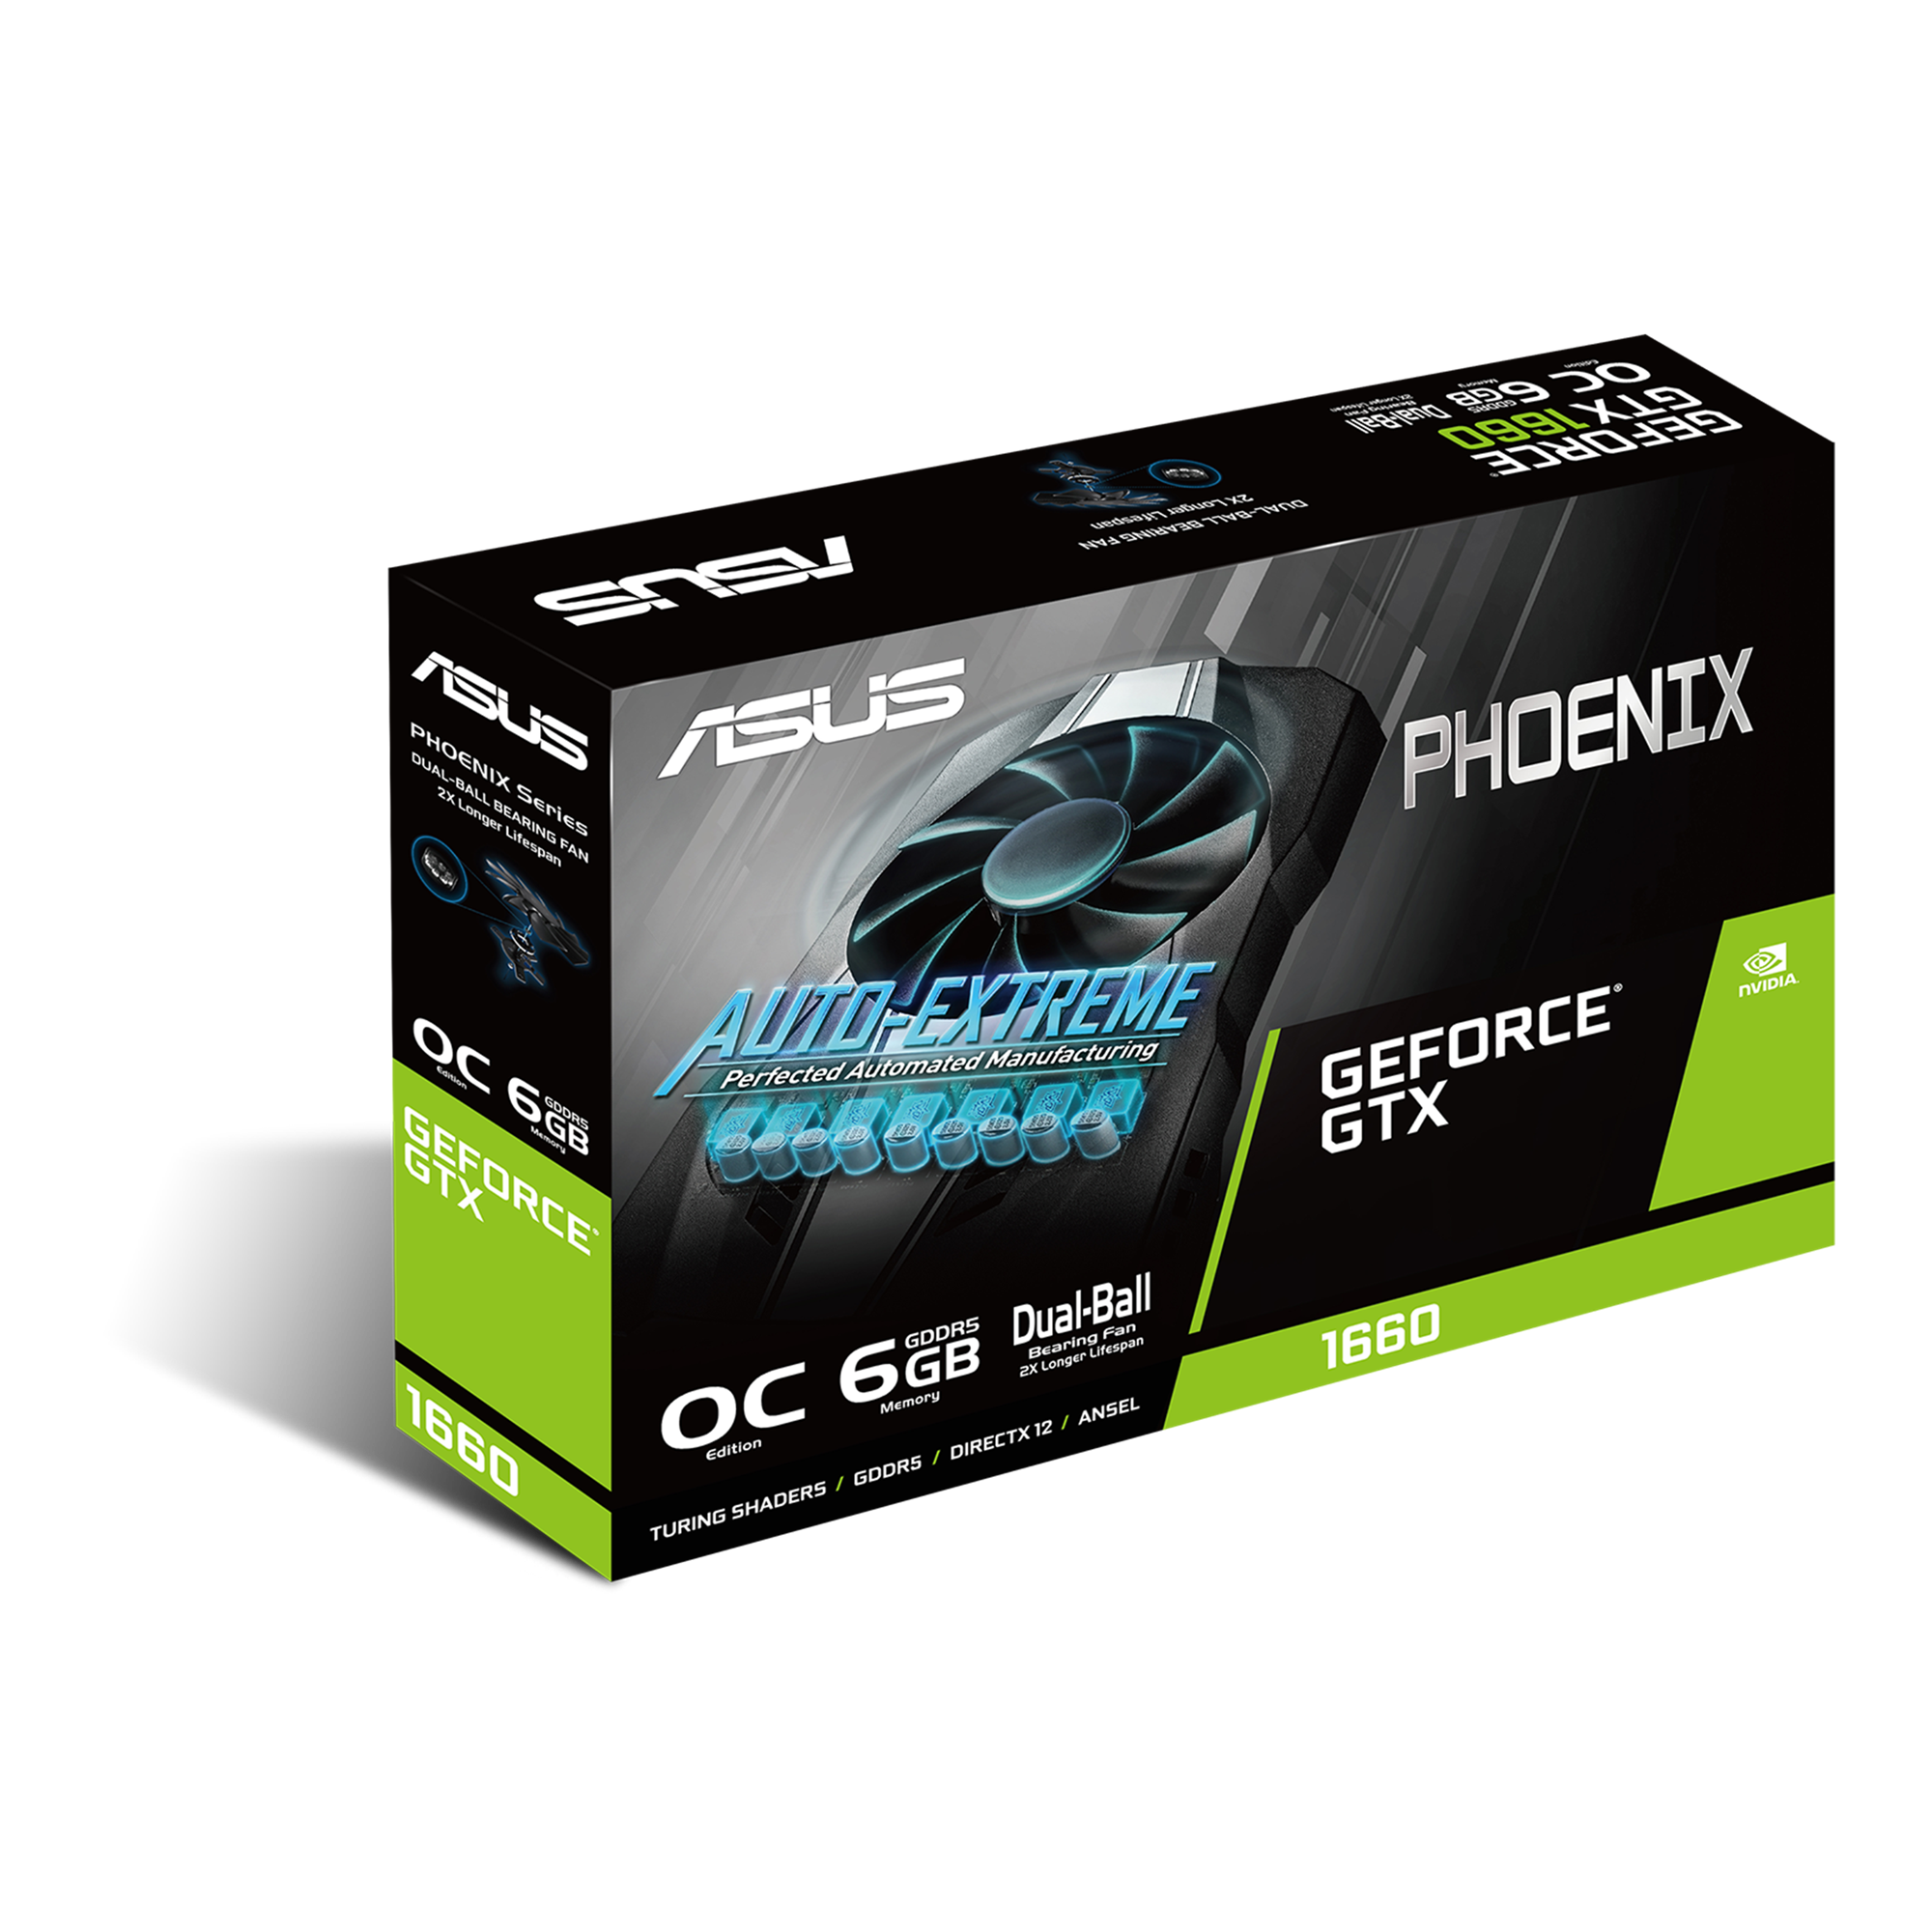 PH-GTX1660-O6G ASUS Geforce GTX 1660 6GB